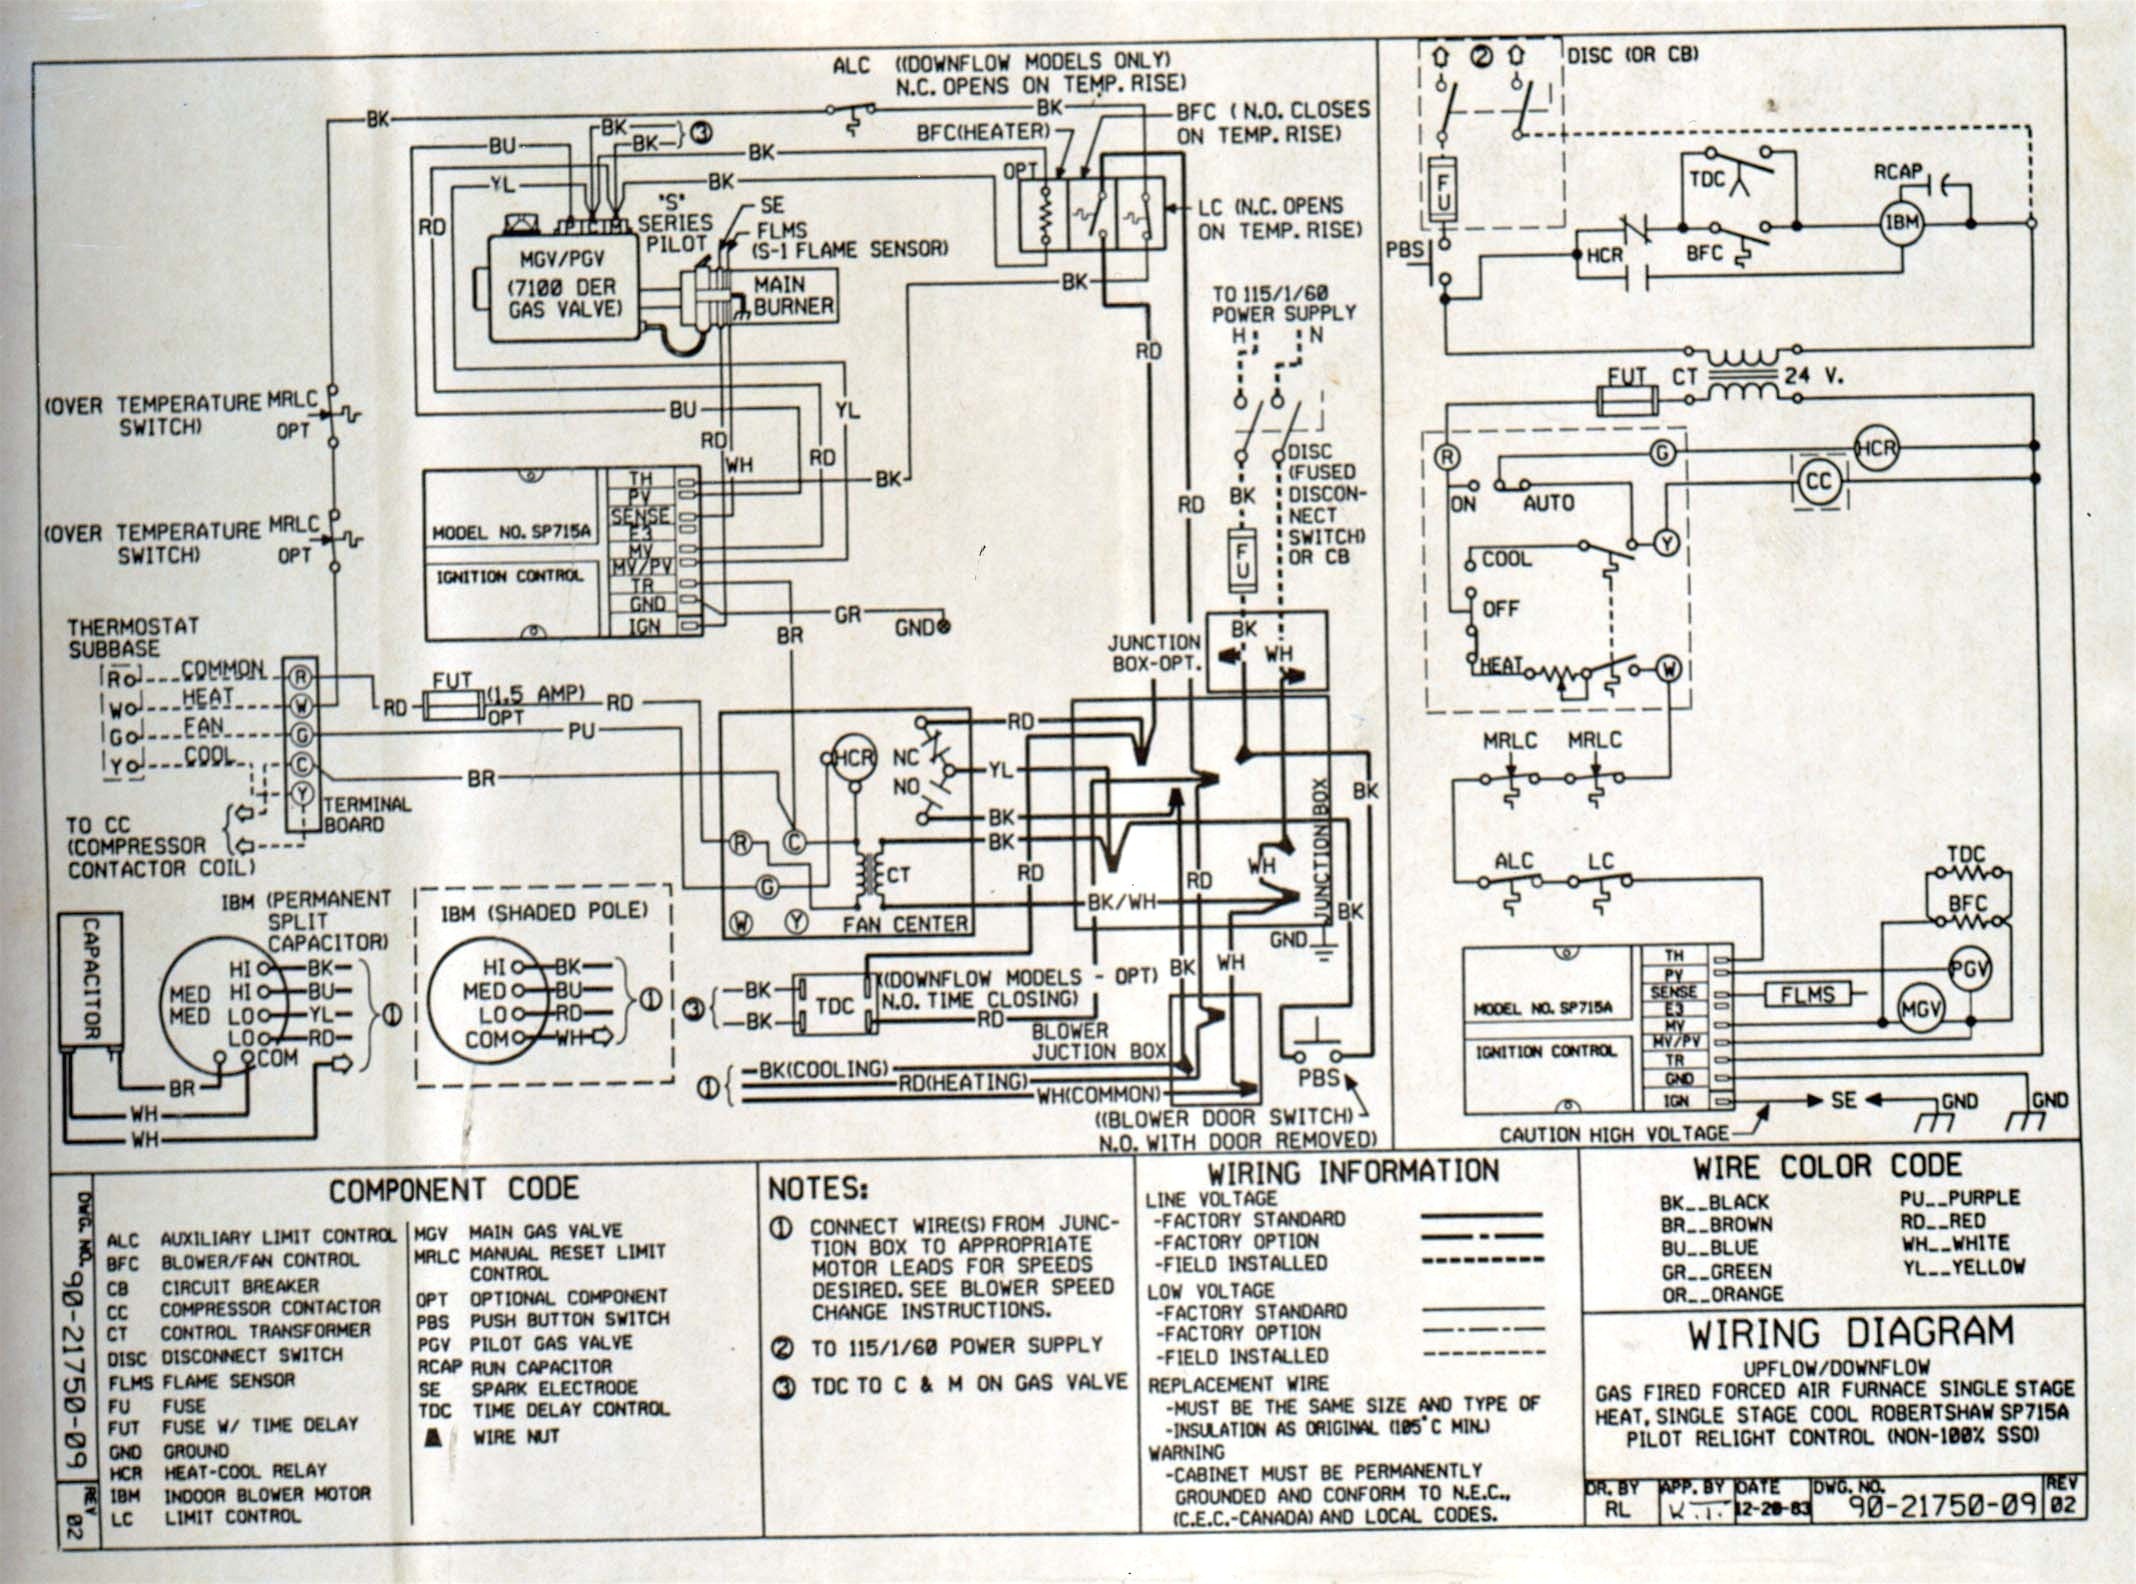 591 Furnace Blower Motor Wiring Diagram My Wiring Diagram Wiring Library